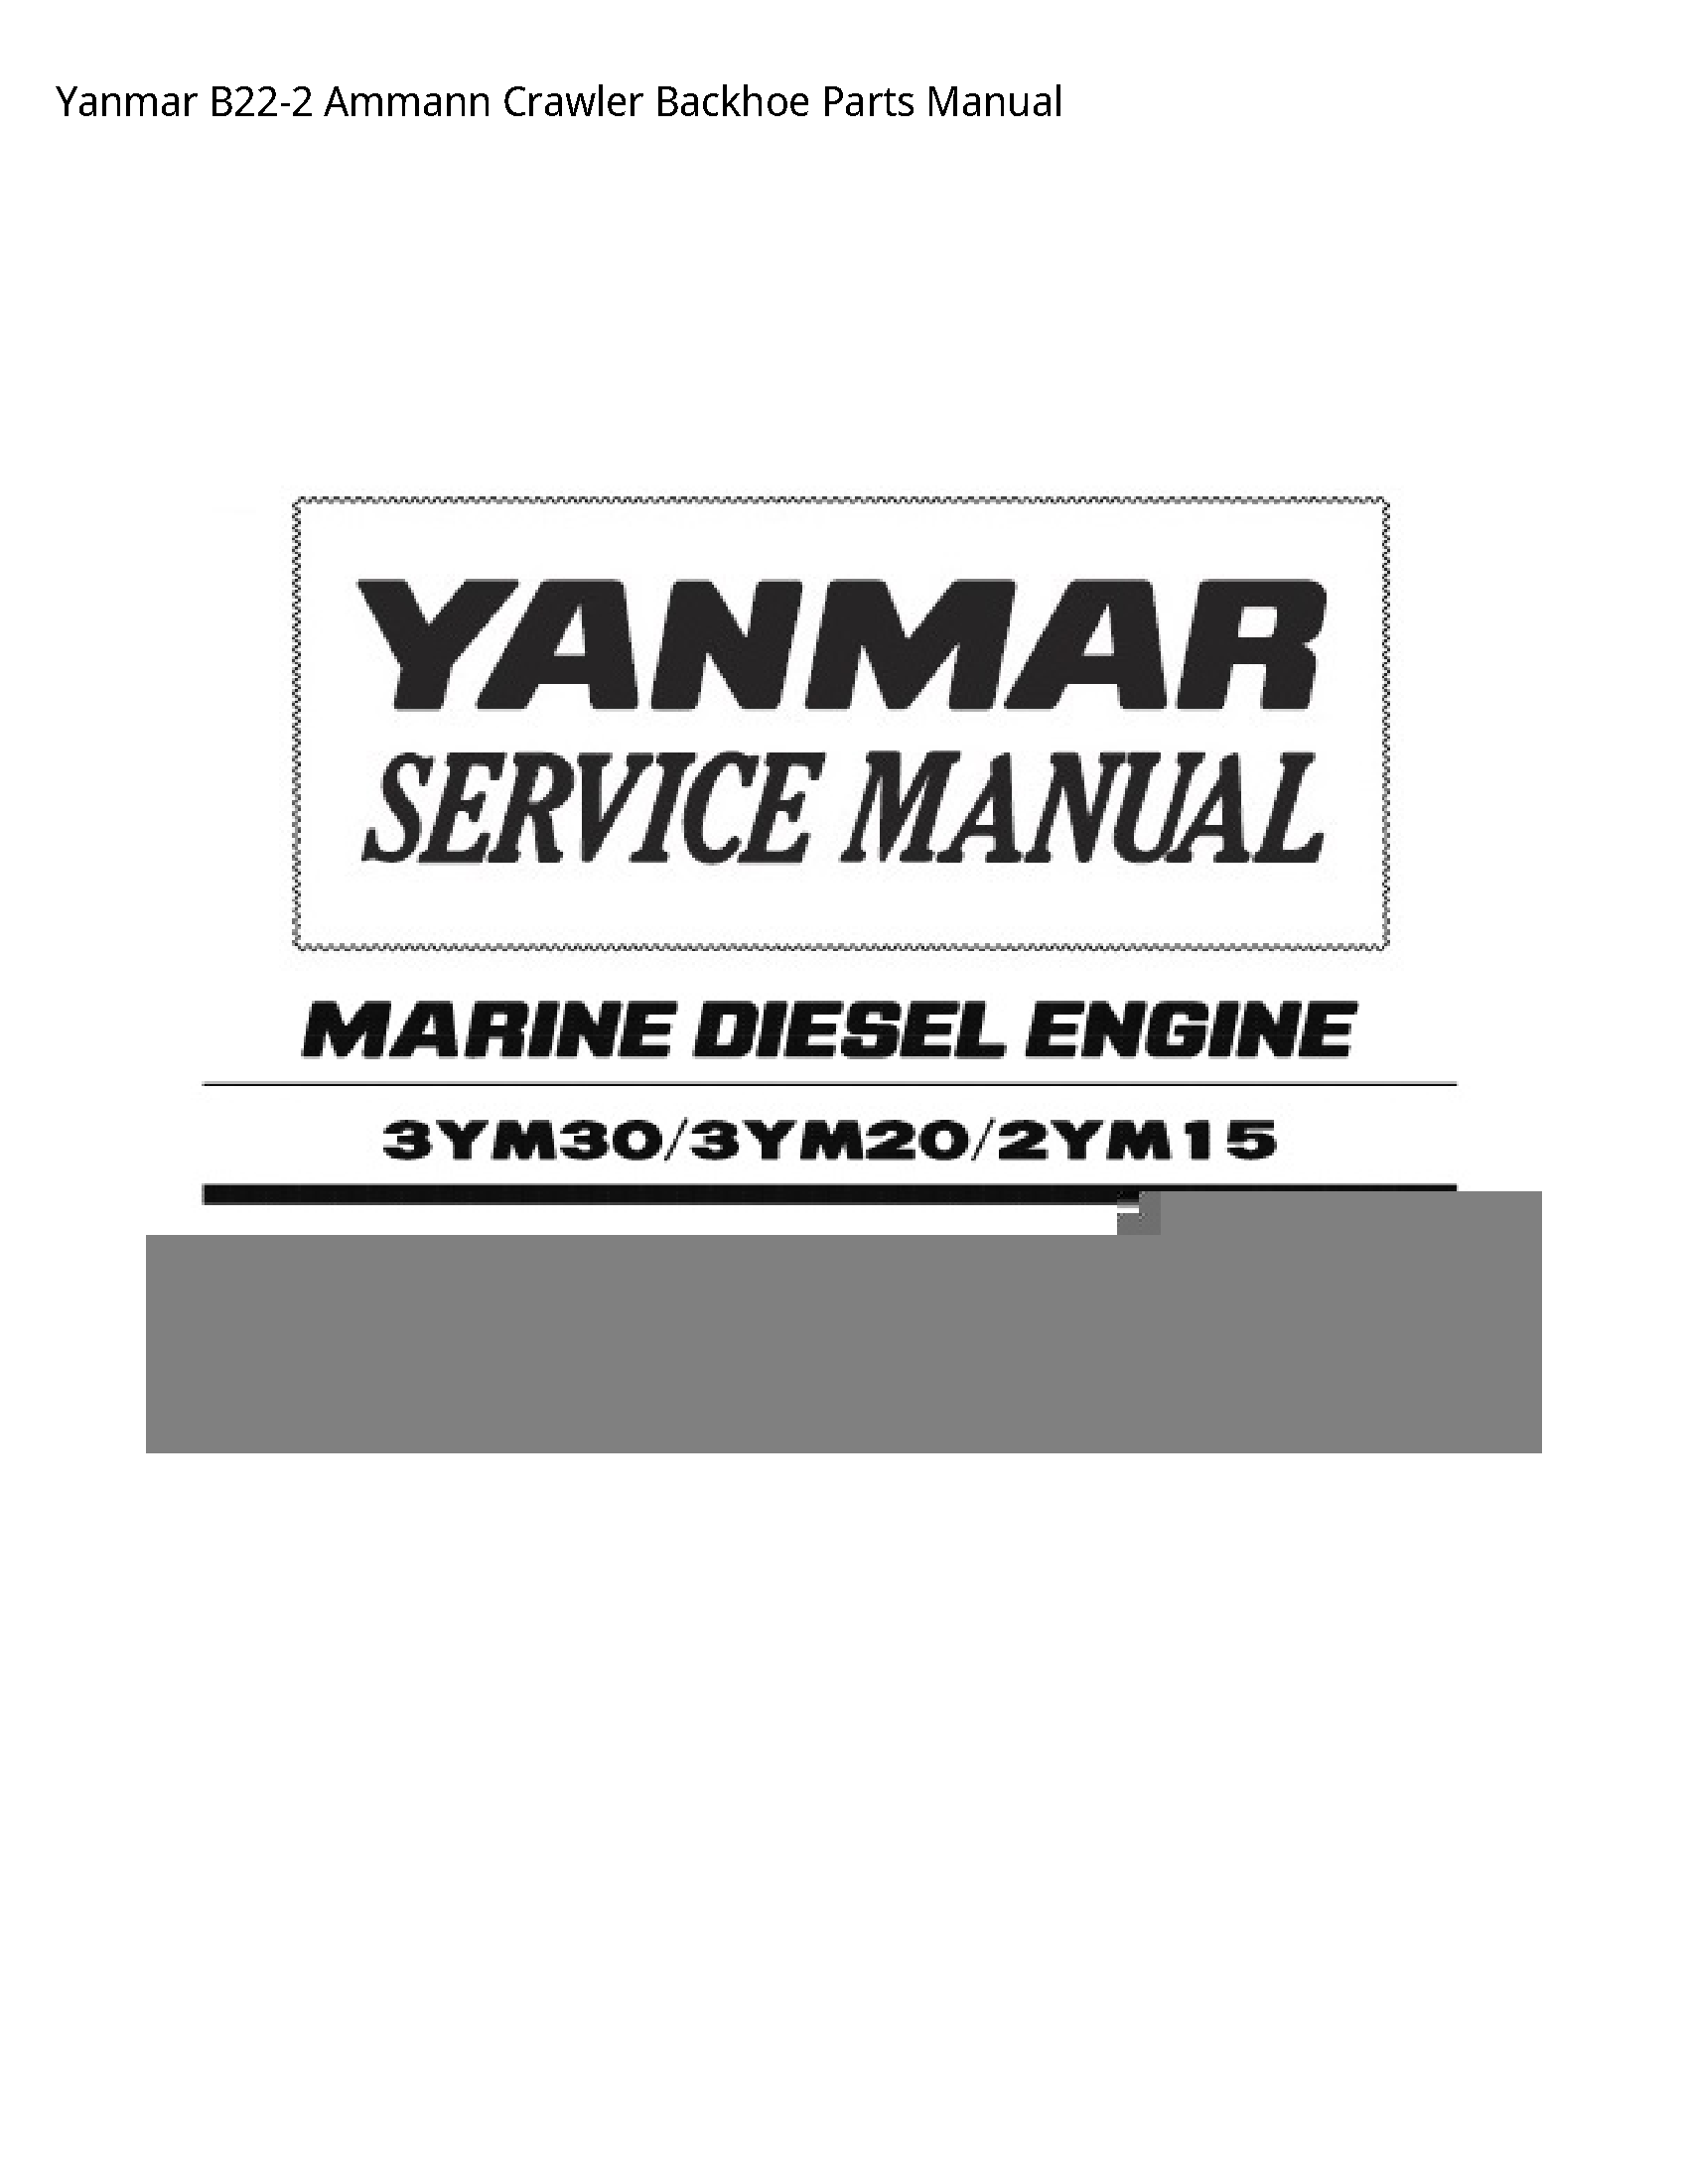 Yanmar B22-2 Ammann Crawler Backhoe Parts manual